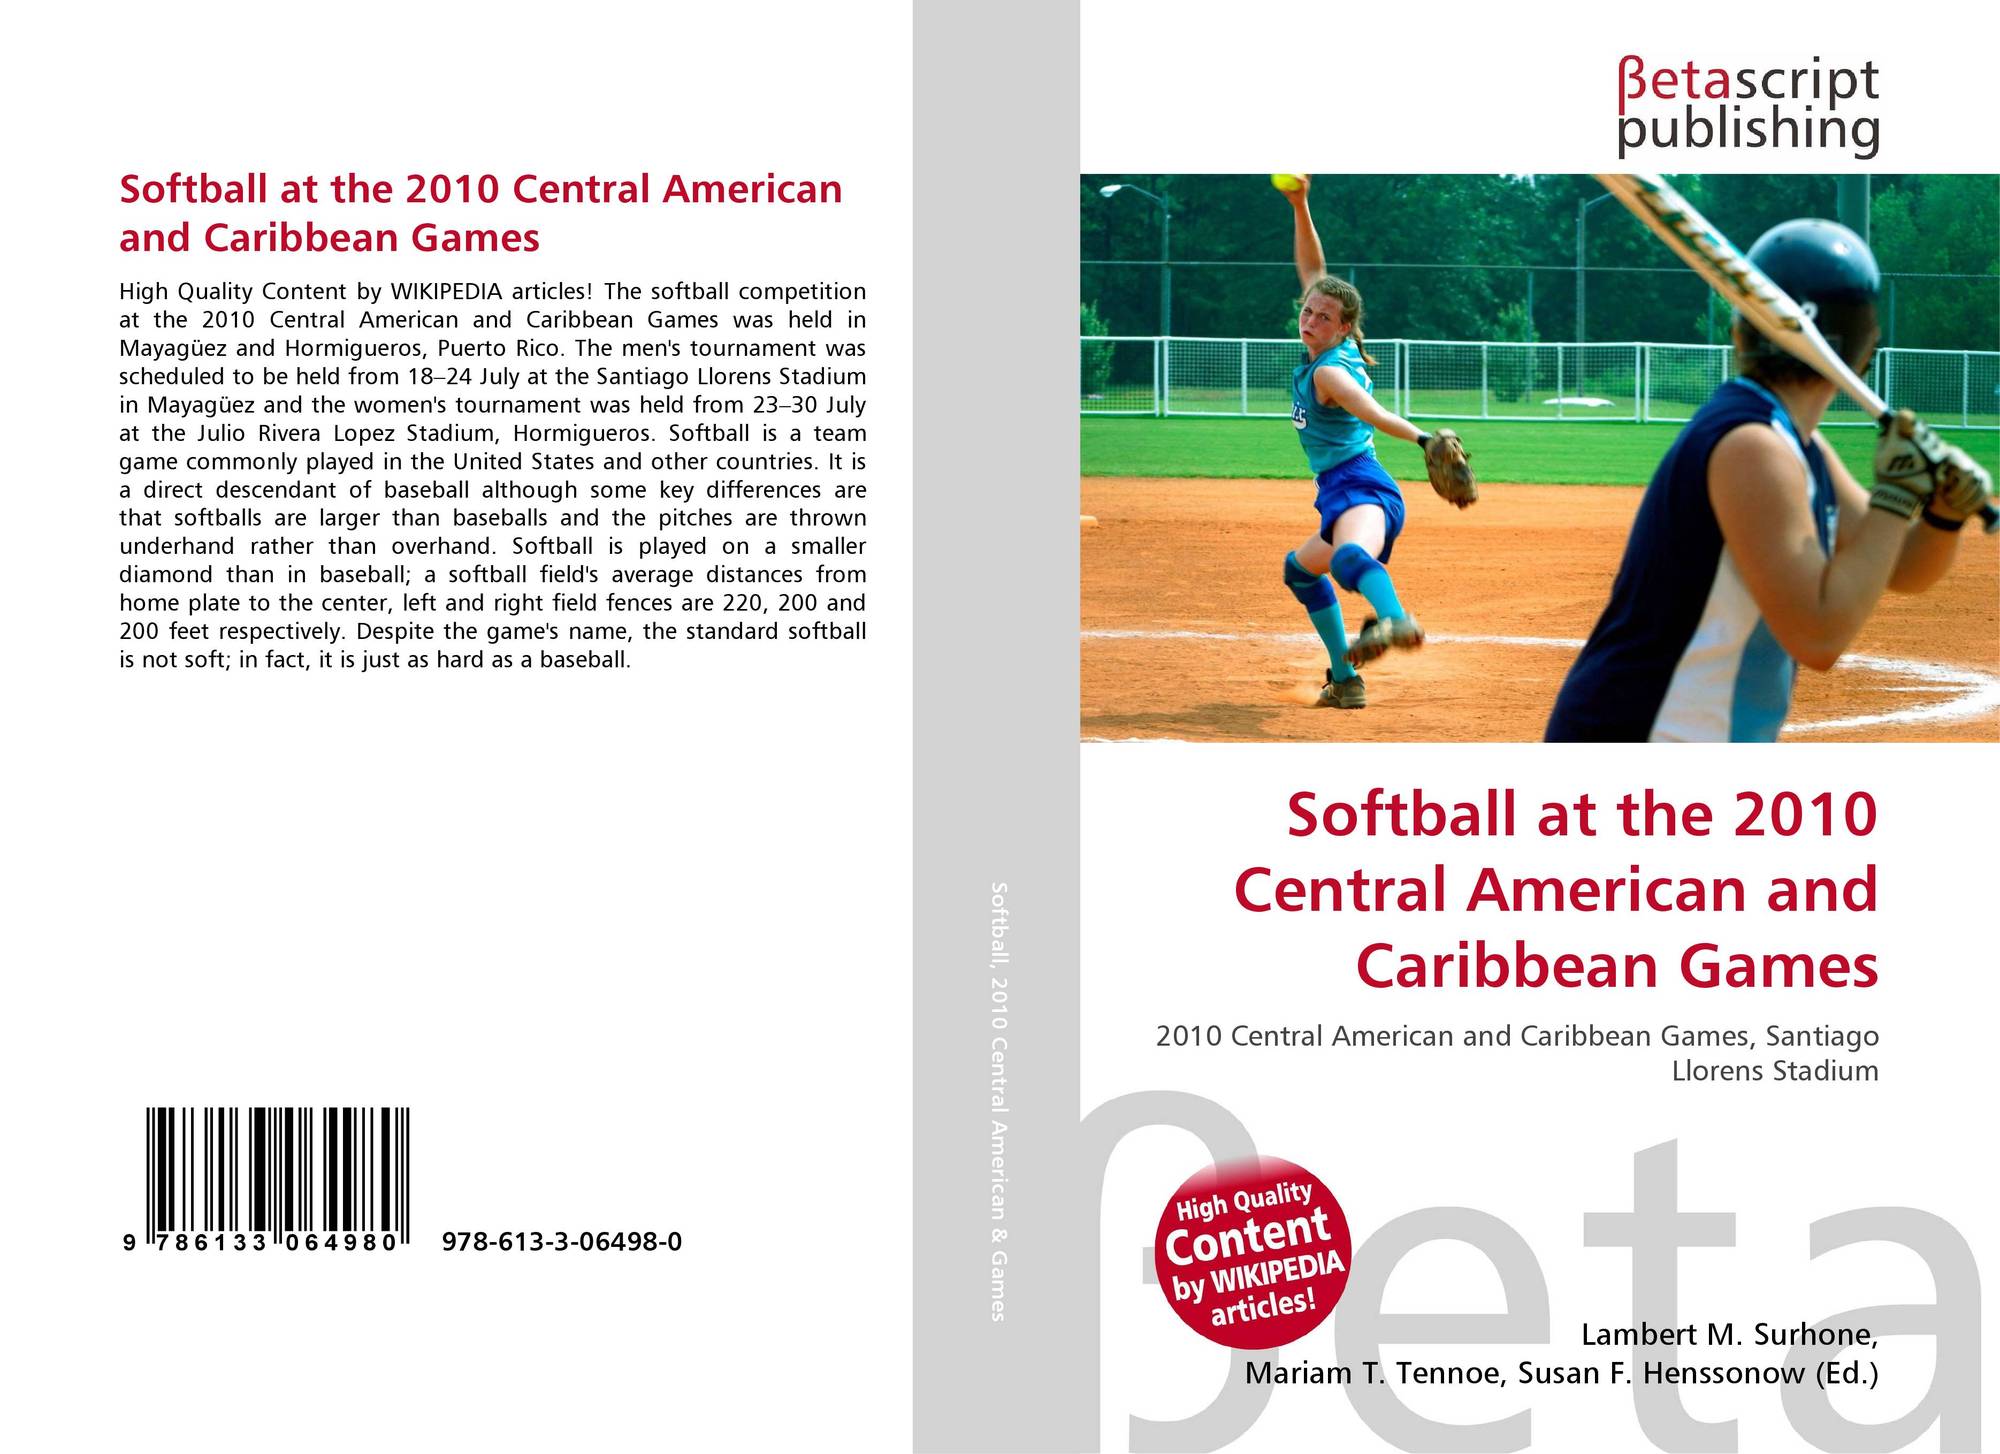 North central ct amateur softball association